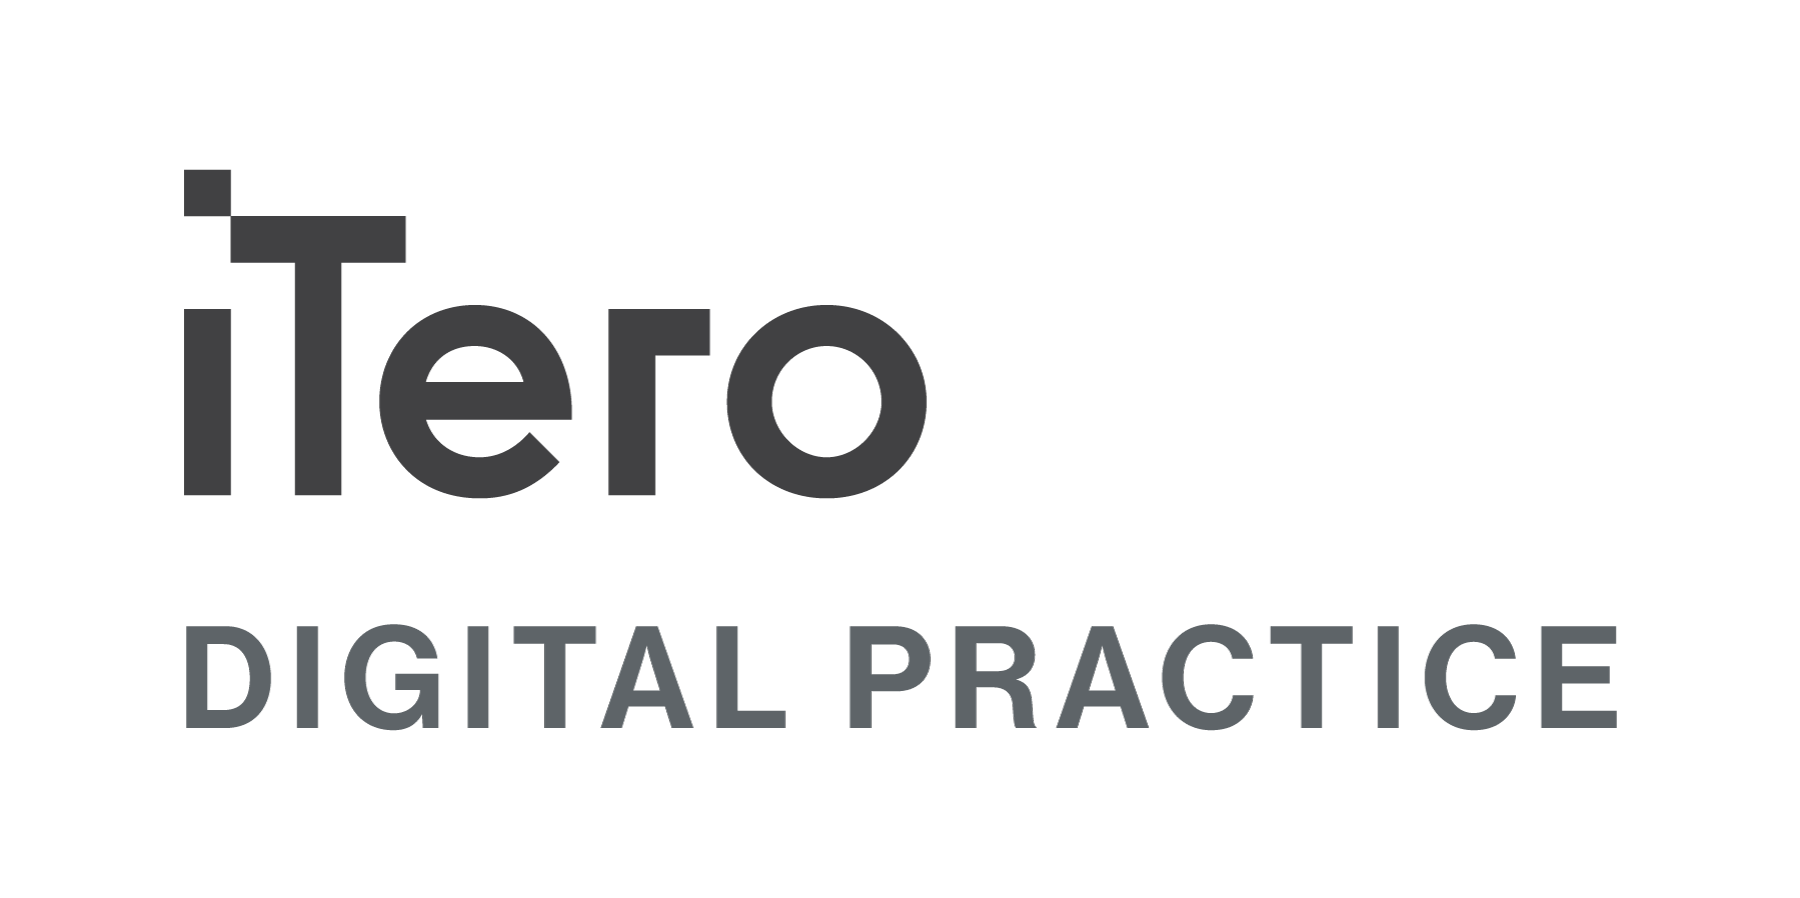 iTero-Digital-Practice-charcoal